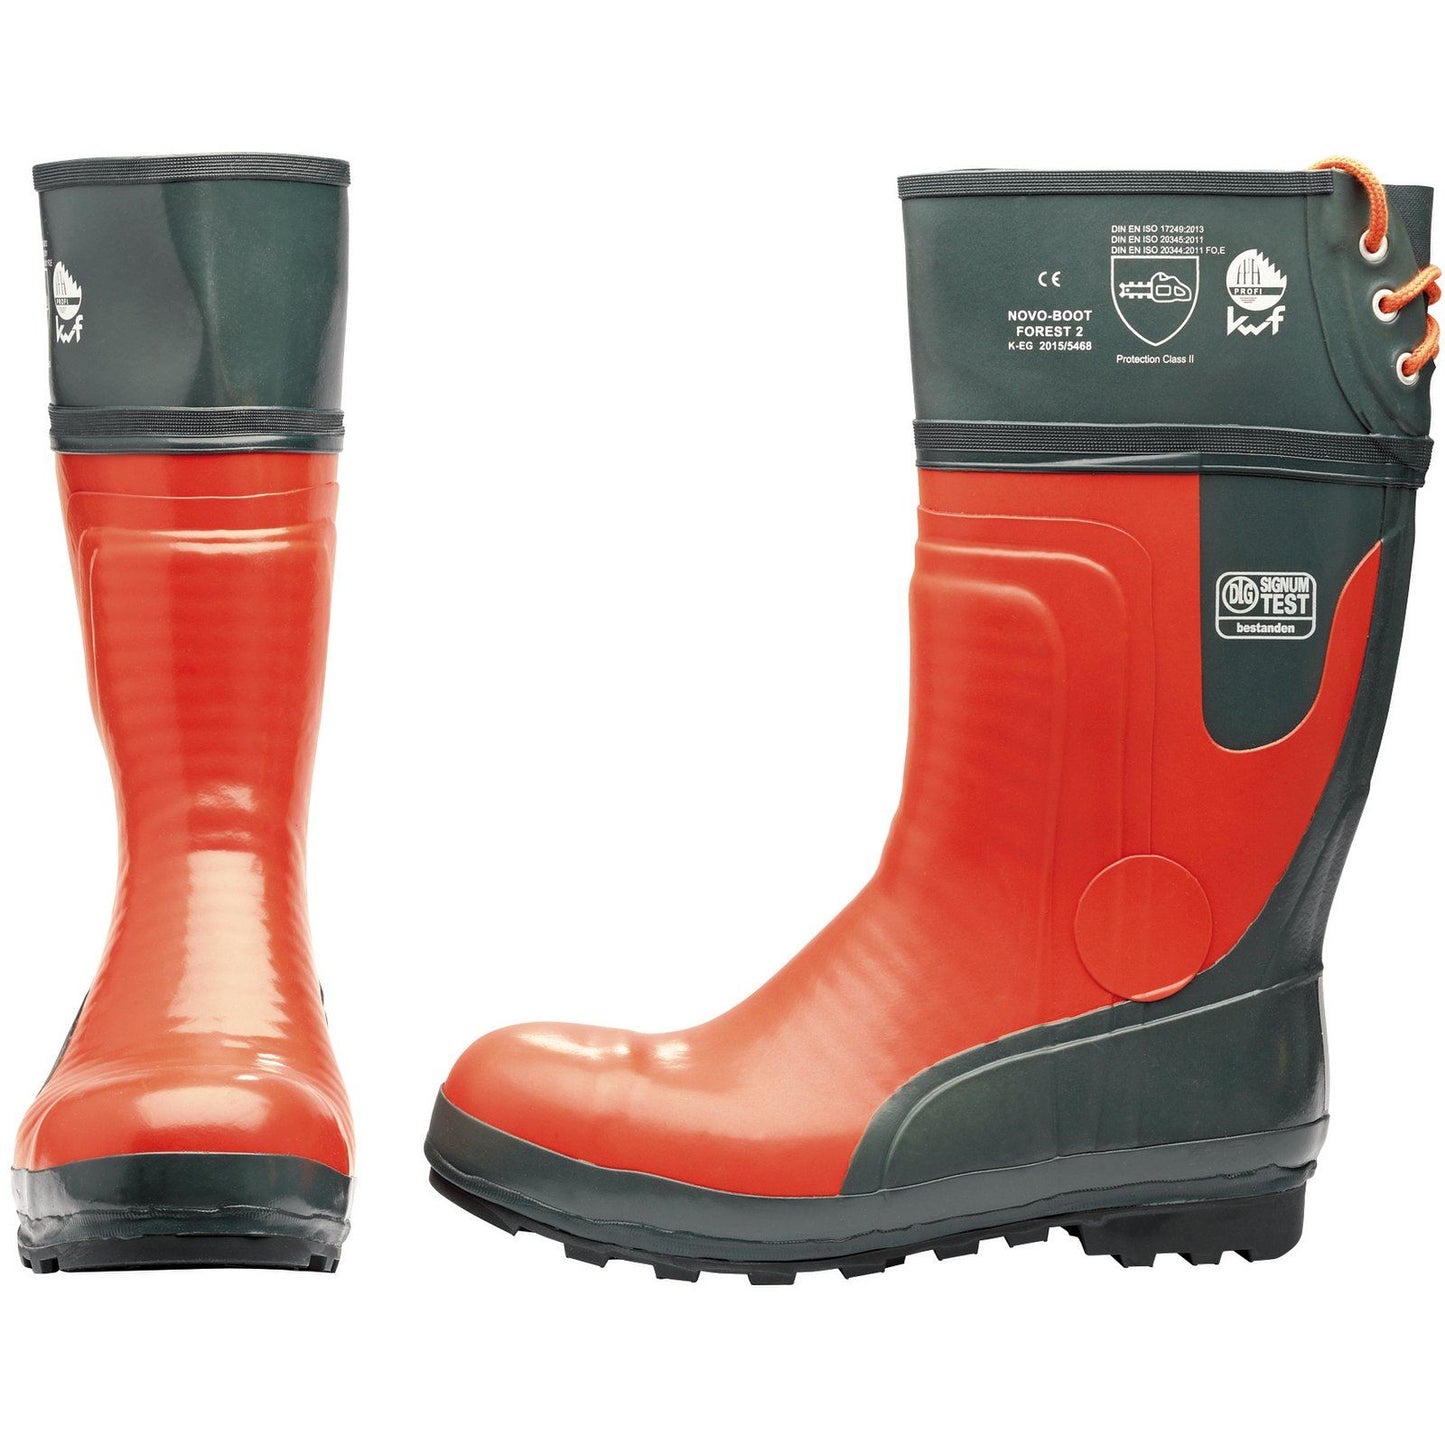 Draper Expert Mens Chainsaw Safety Boots Black / Orange Size 8 - 12060